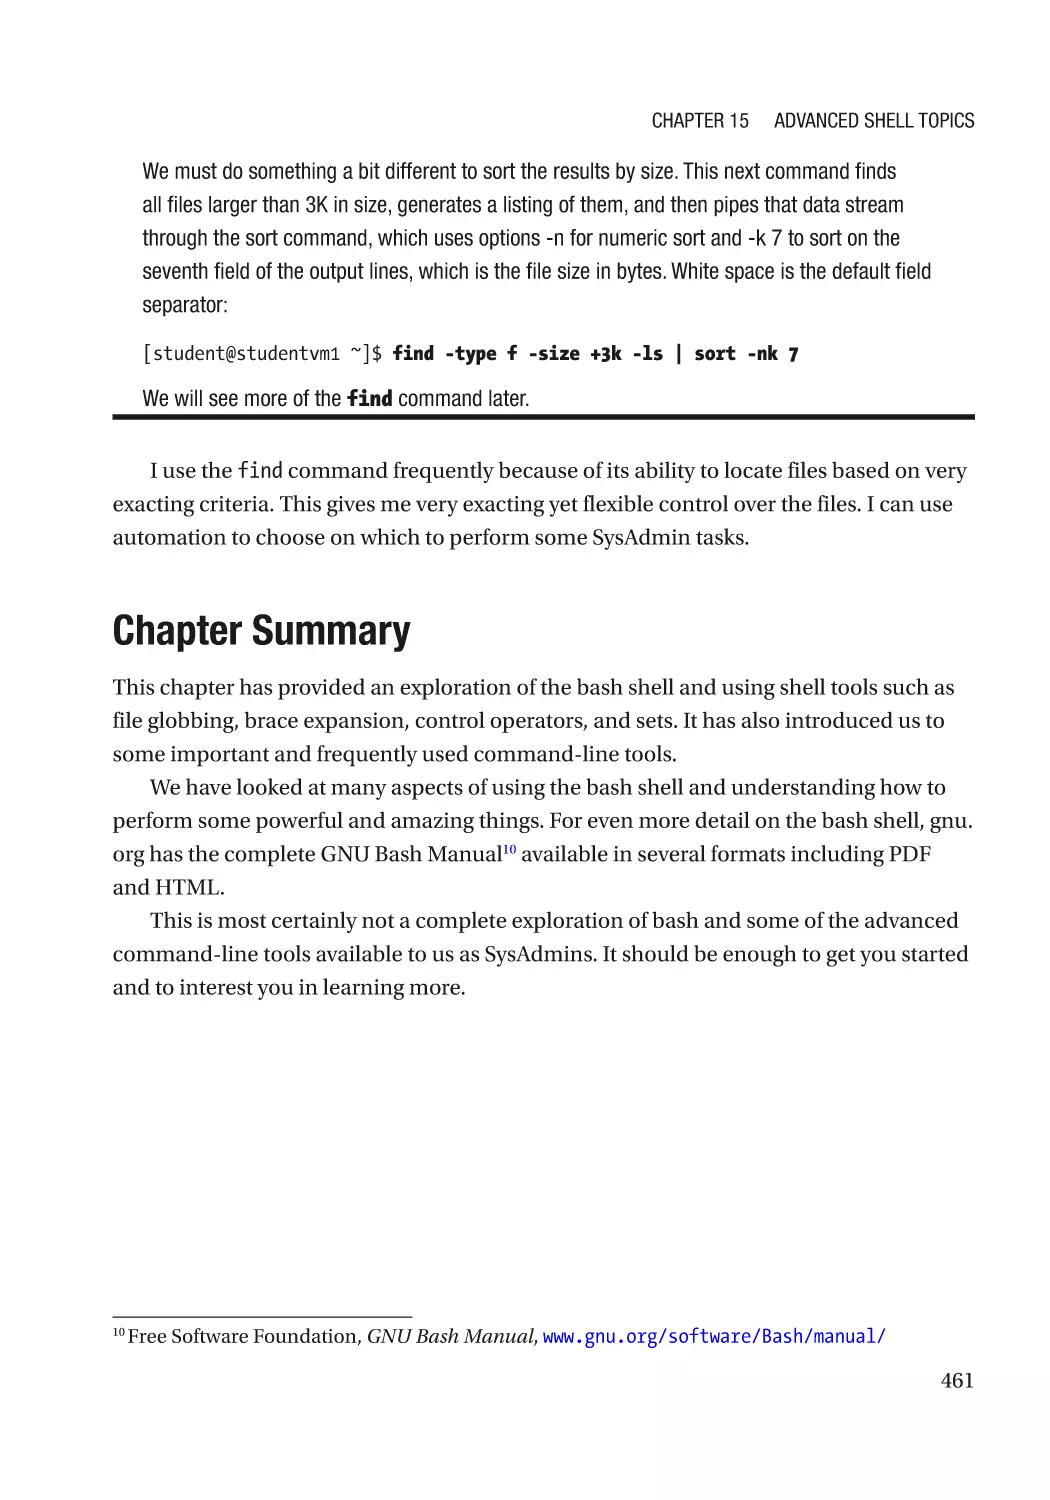 Chapter Summary